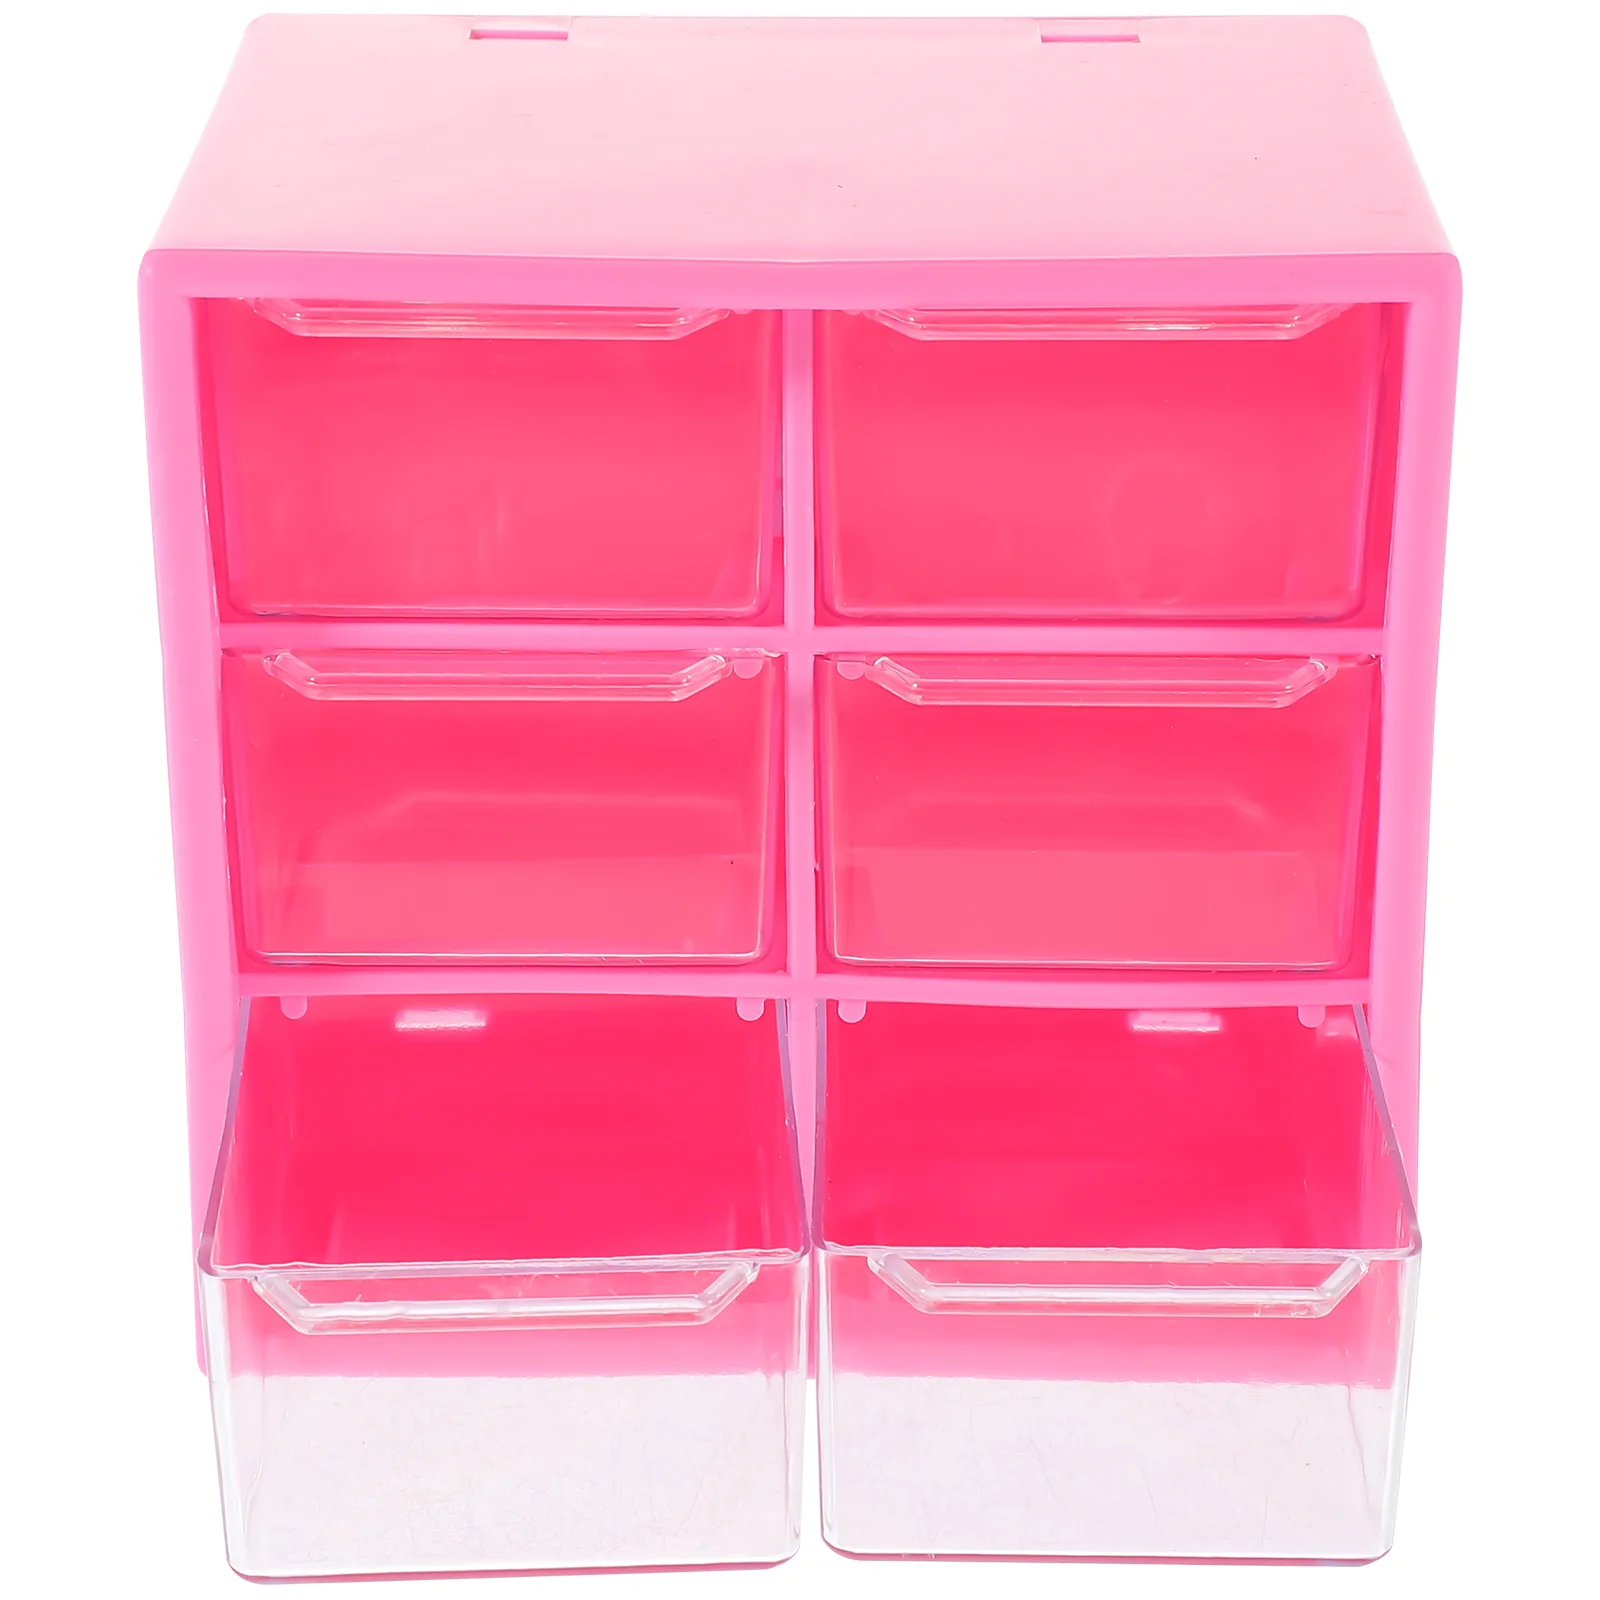 Drawer Storage Box Cosmetics Office Case Bathroom Organizer Makeup Stand Decor Desk Plastic Stationery Drawers